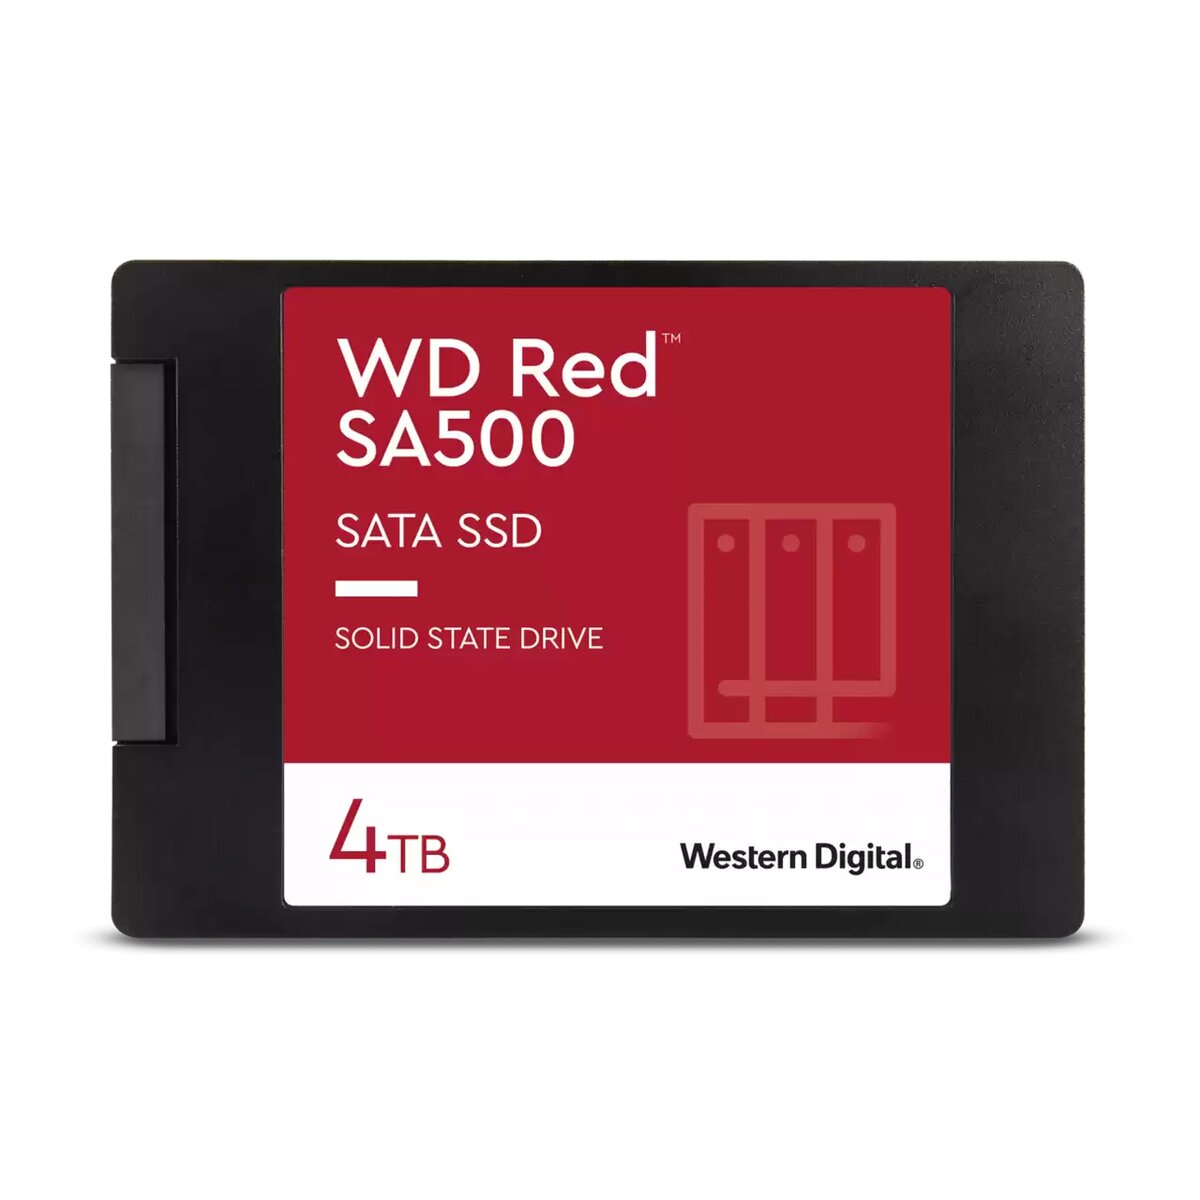 UNIDAD SSD WD RED SA500 SATA lll 4TB 2.5